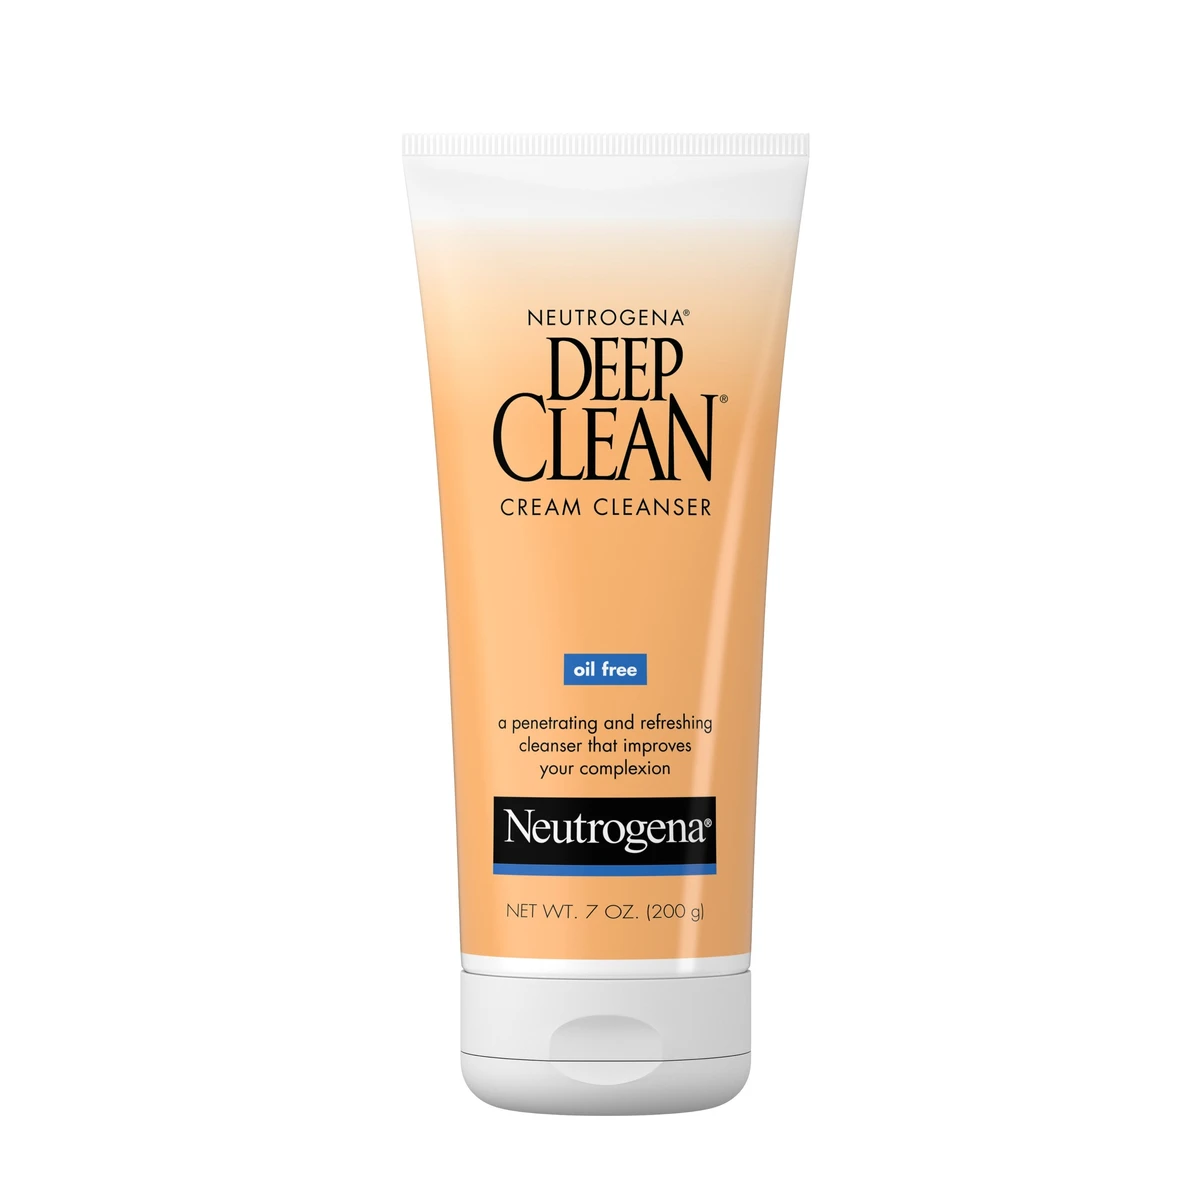 Neutrogena Deep Clean Cream Cleanser 7 fl oz